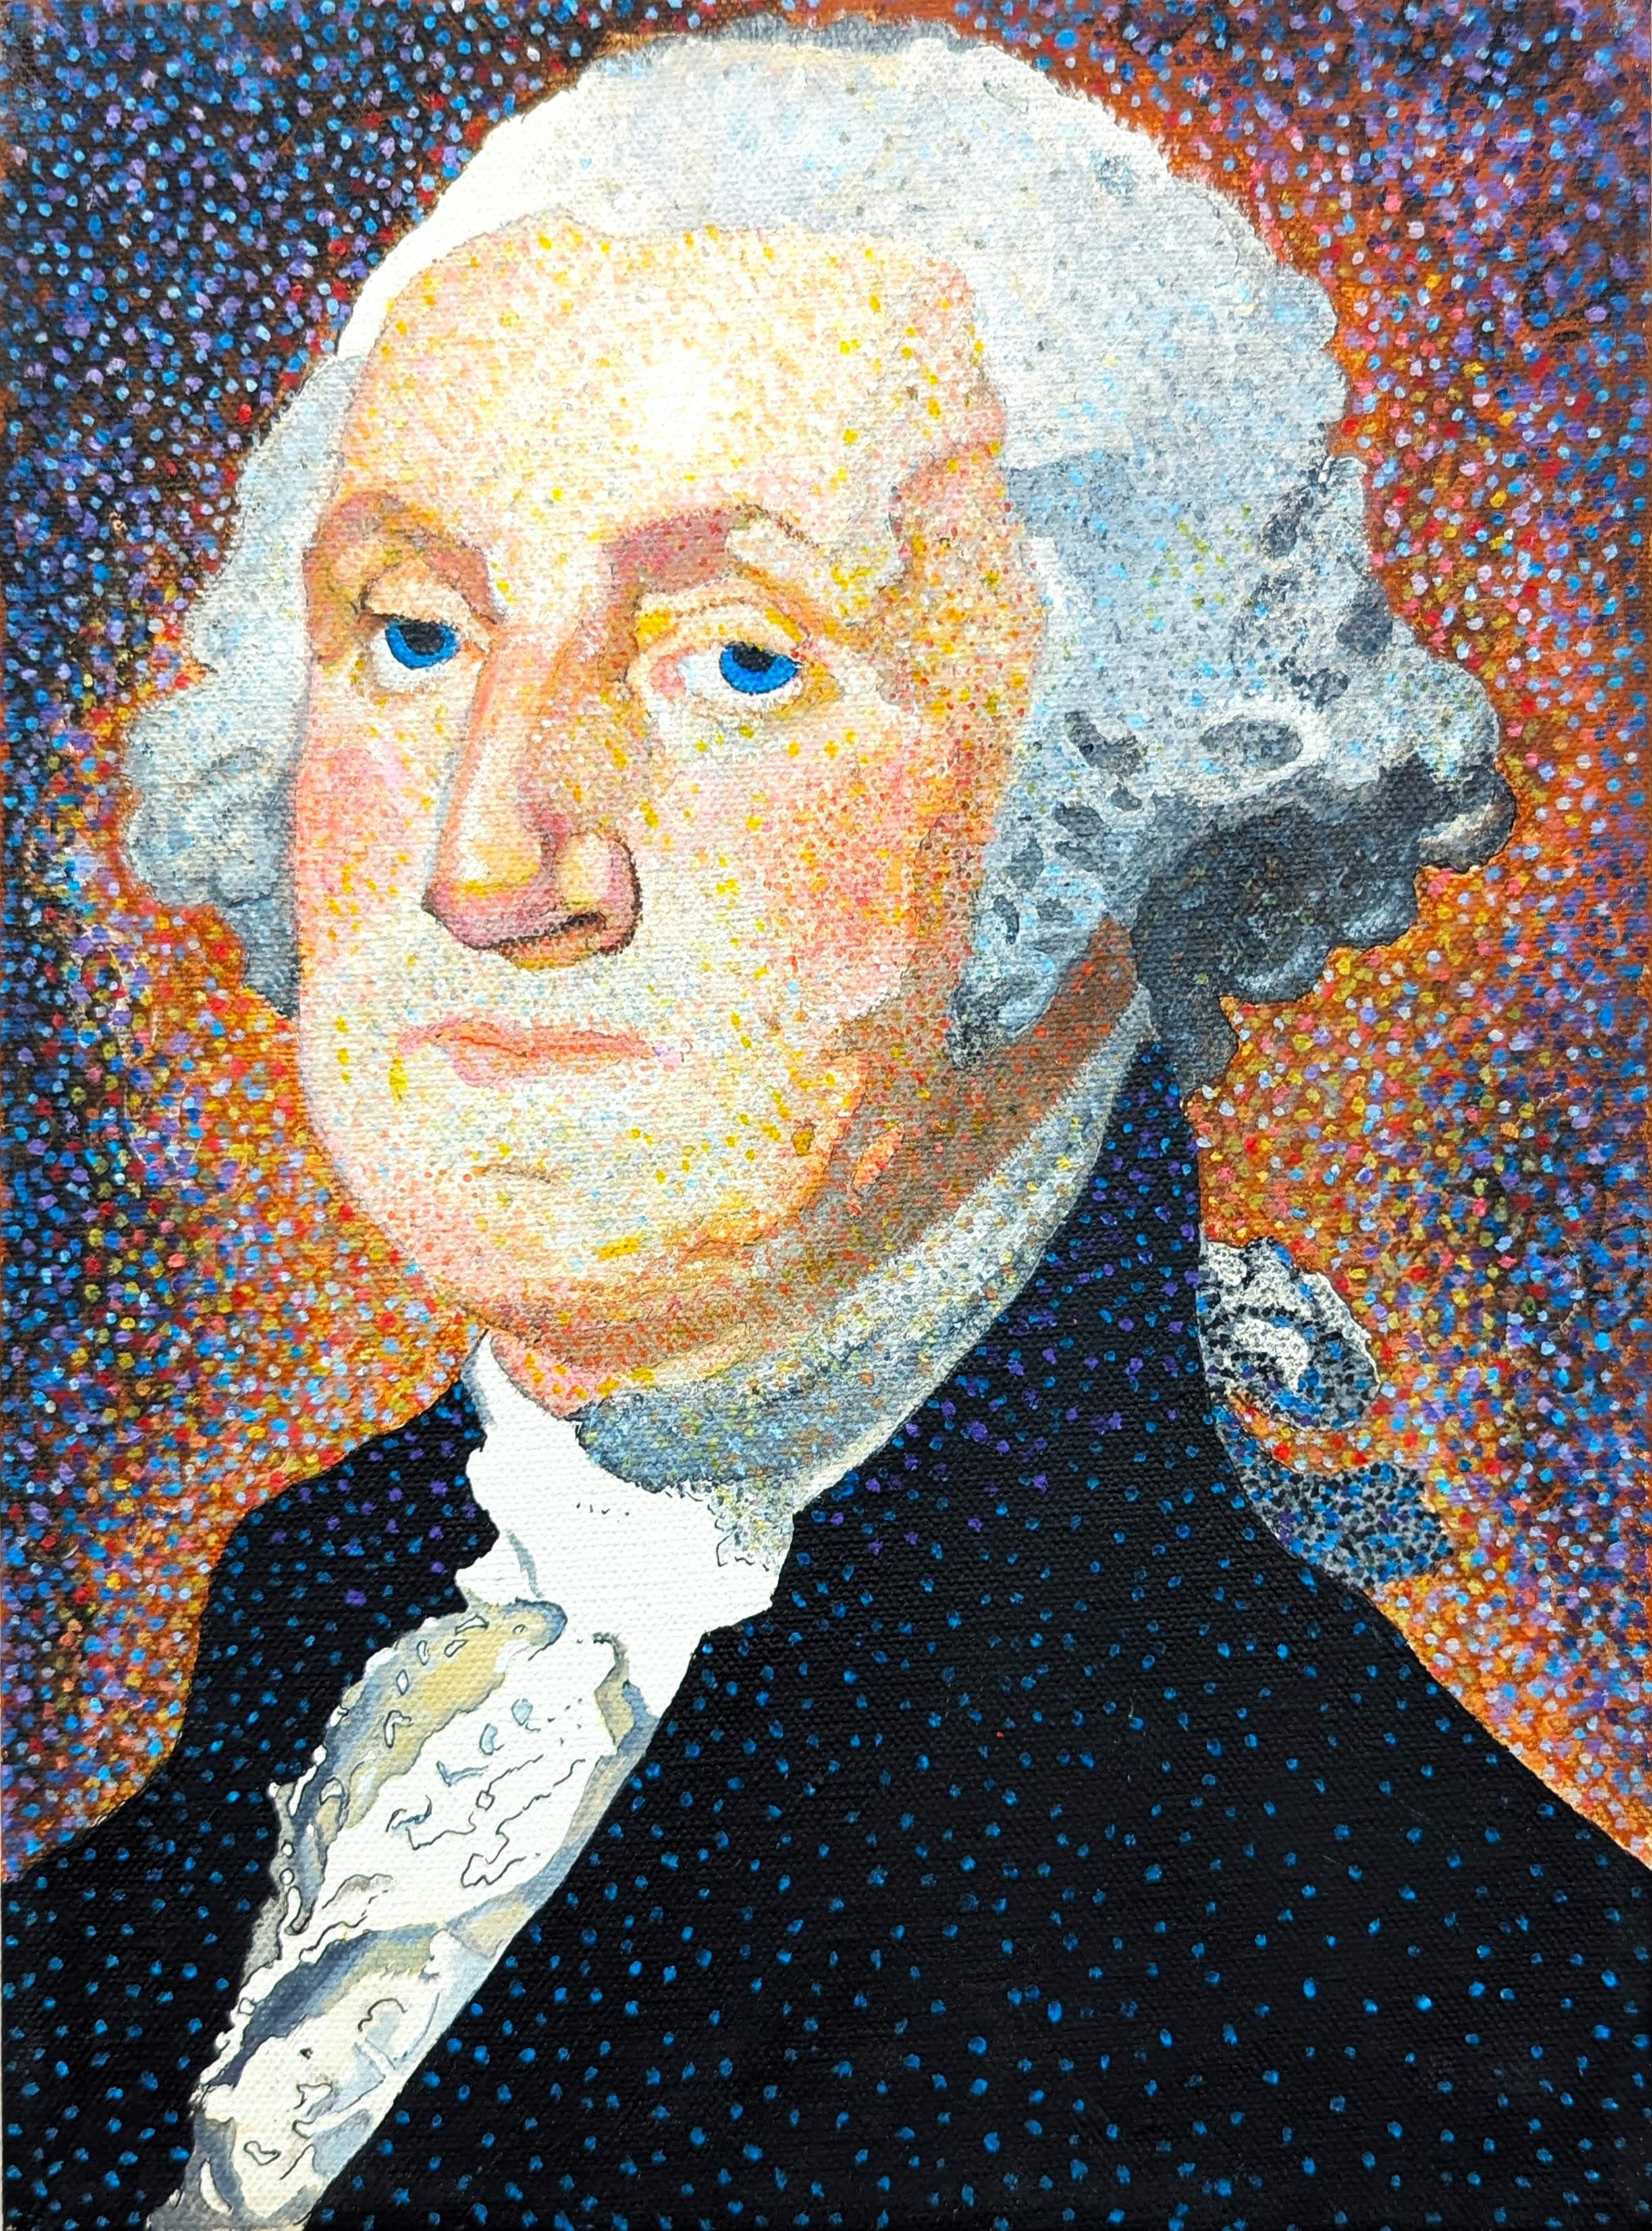 Clark V. Fox Portrait Painting - "George Washington 9/11" Modern Pointillist Figurative Presidential Portrait 